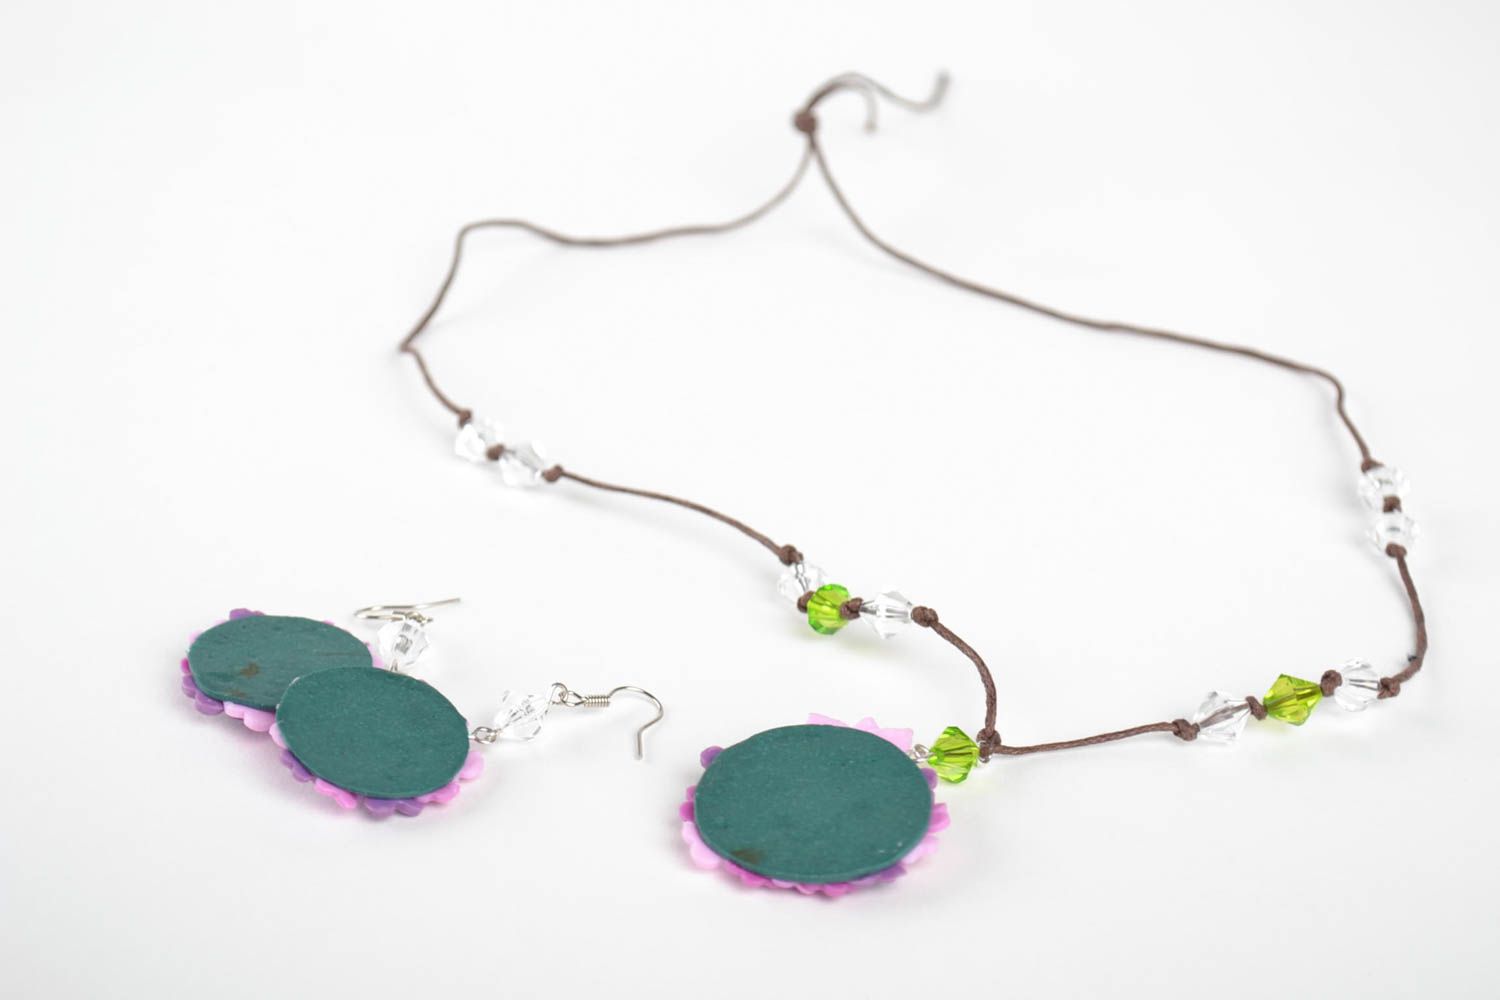 Flower jewelry handmade jewelry set dangling earrings pendant necklace gift idea photo 5